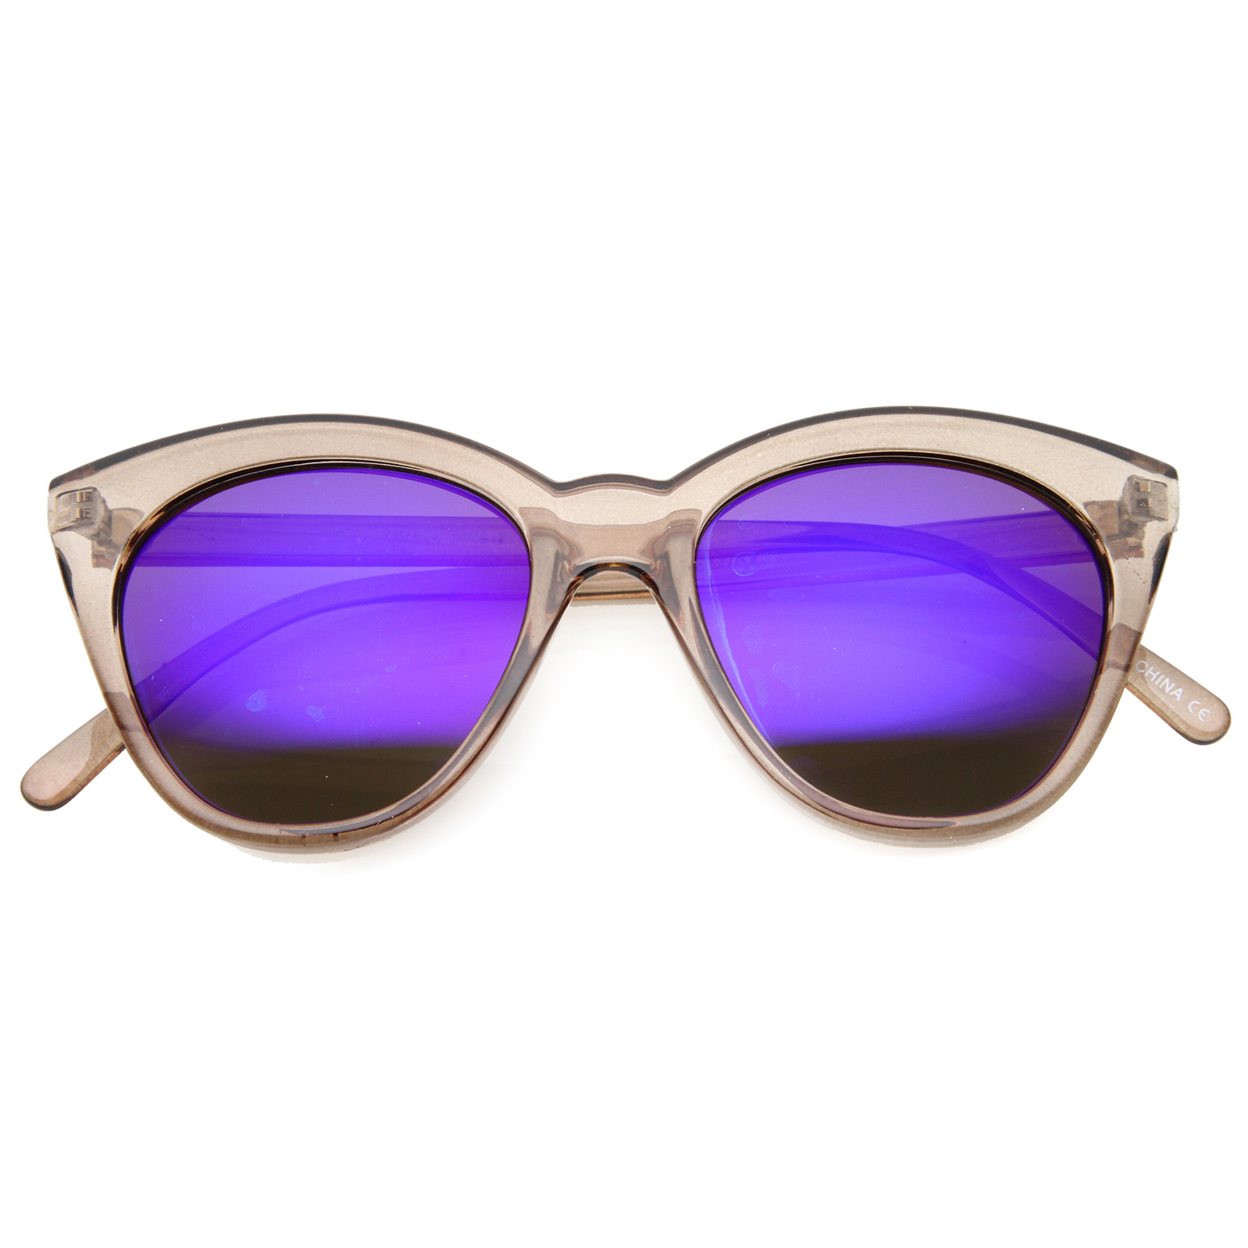 Women's Crystal Translucent Frame Flash Mirror Lens Round Cat Eye Sunglasses 52mm 9839 - Brown / Magenta